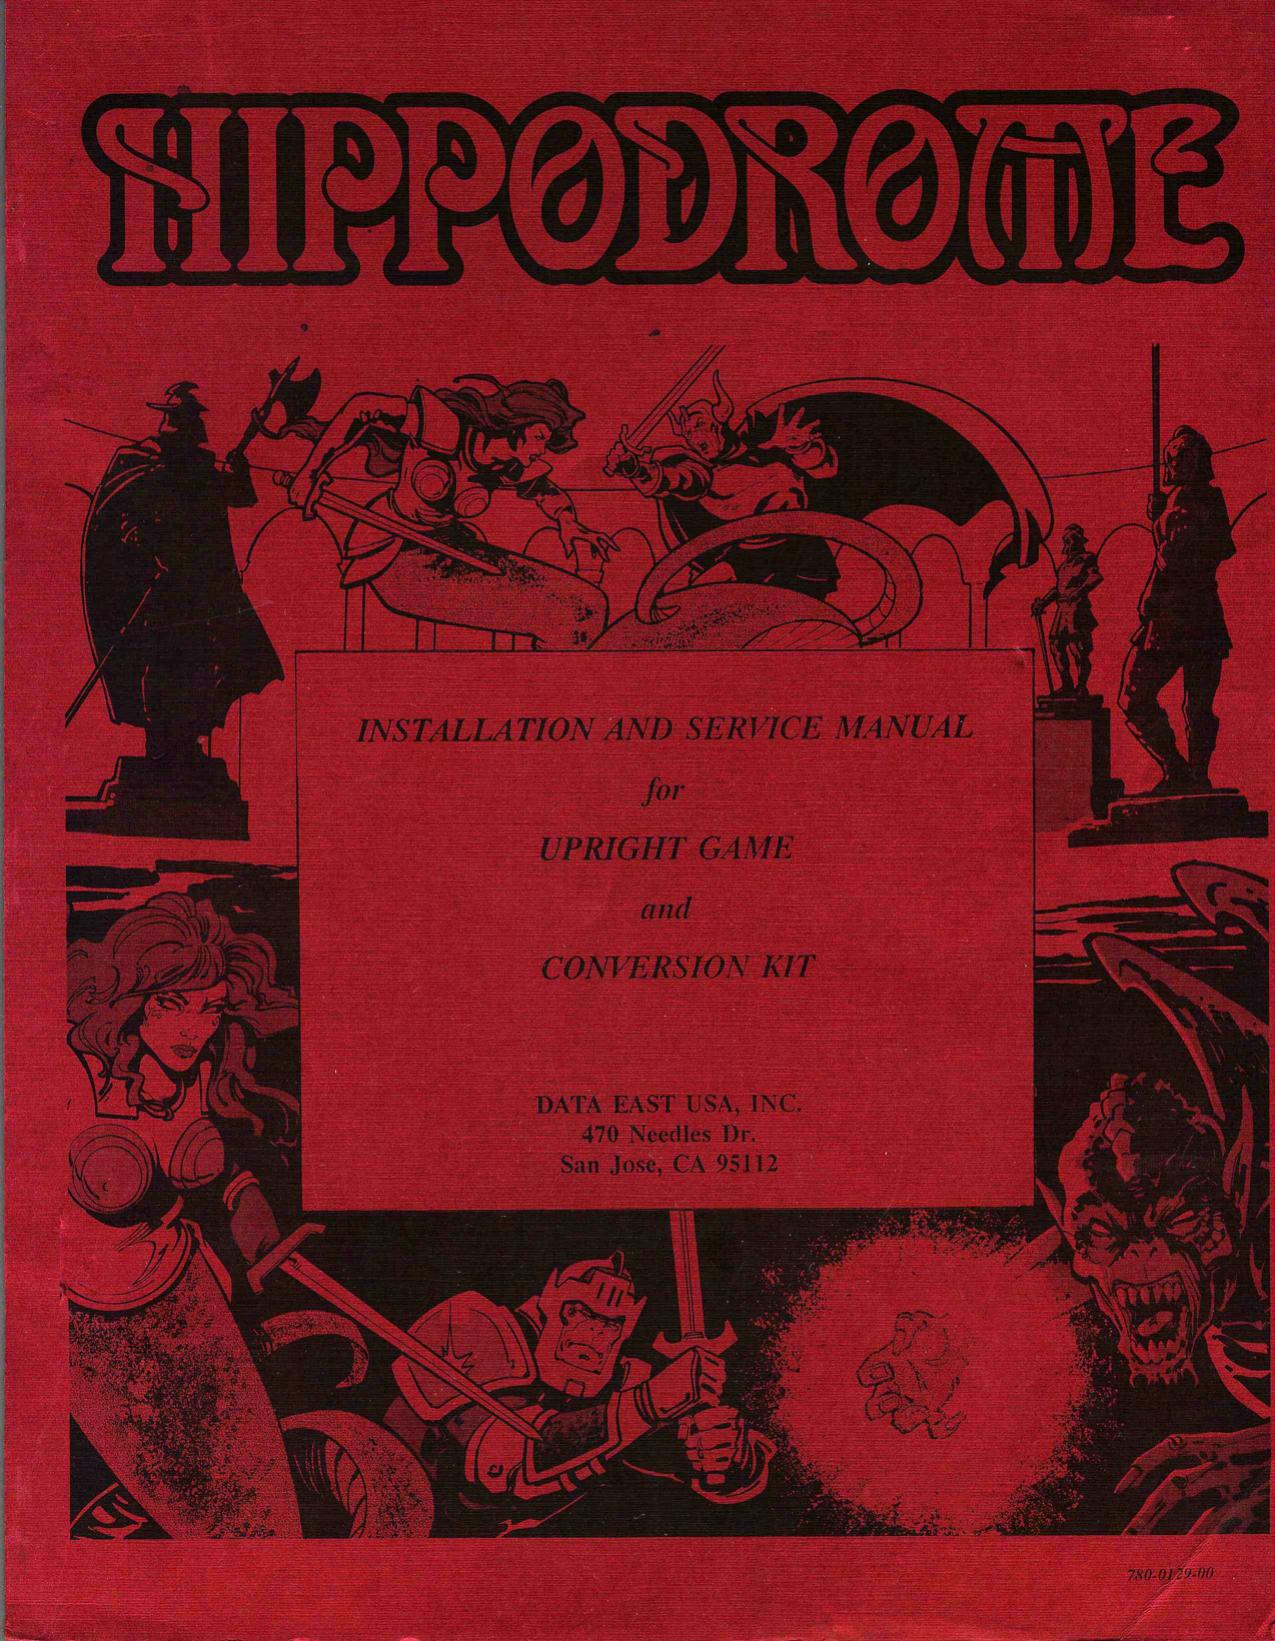 Hippodrome Installation and Service Manual (780-0129-00)